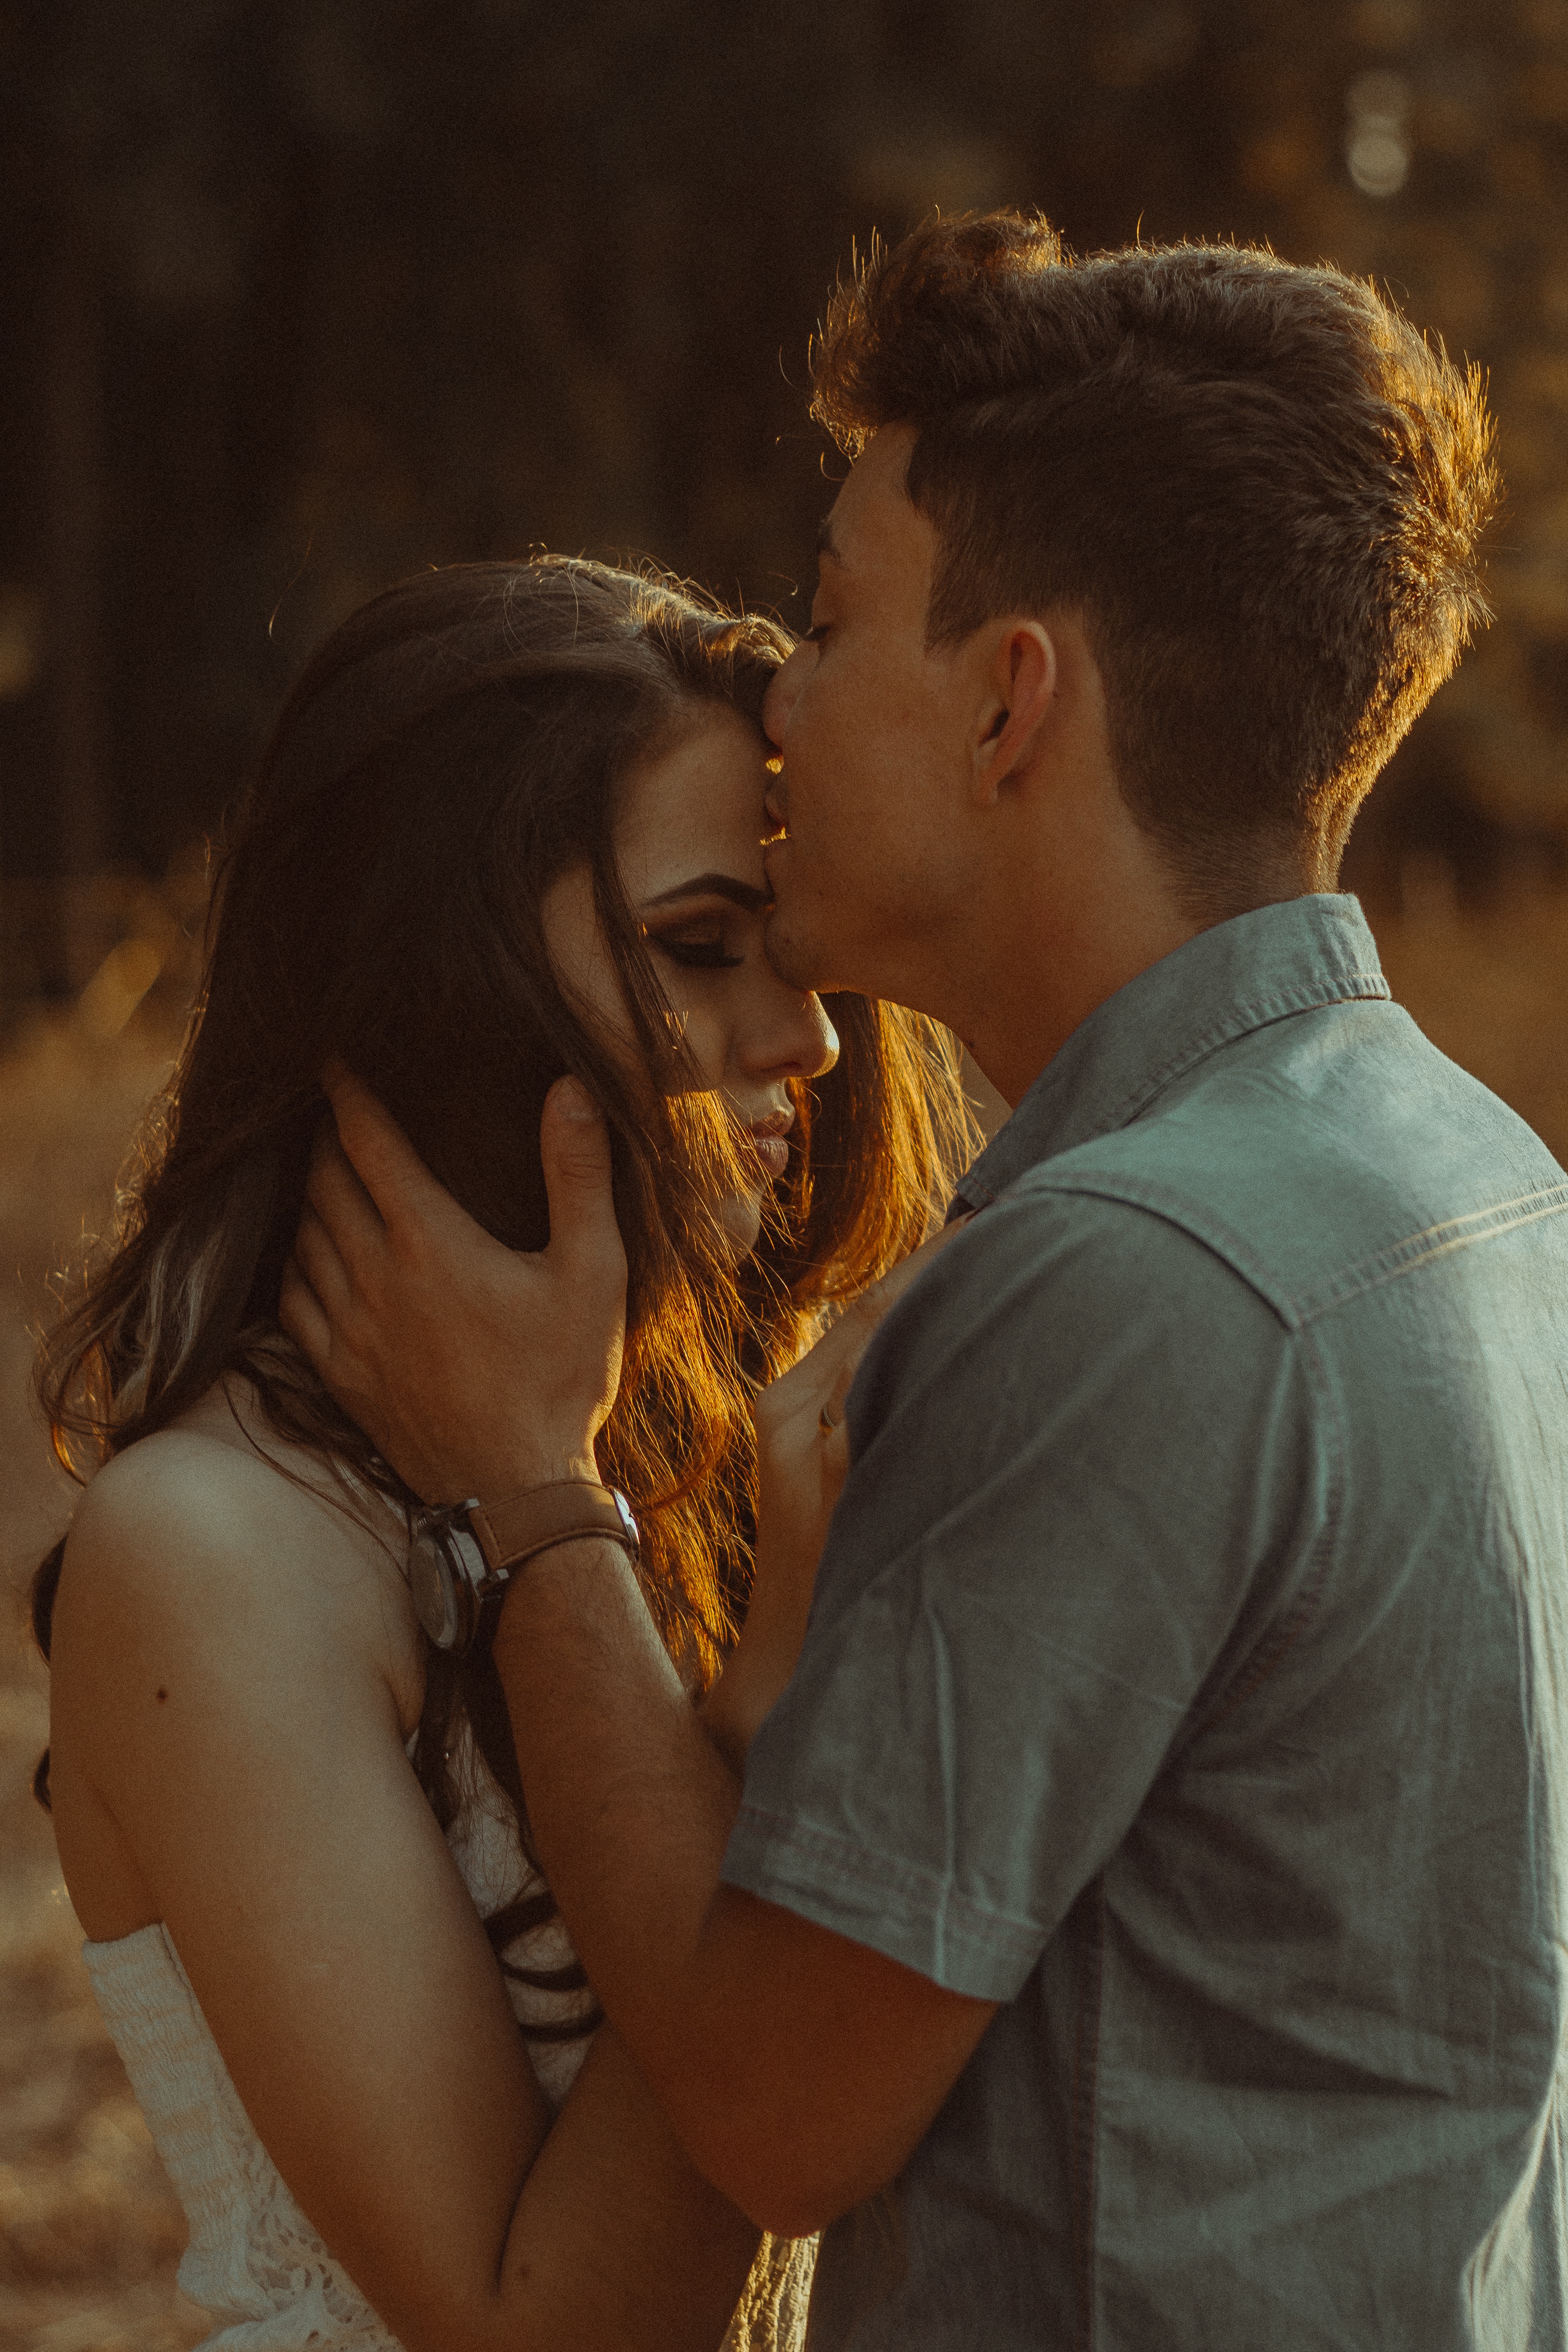 Man Kissing Woman's Forehead. | Source: Unsplash